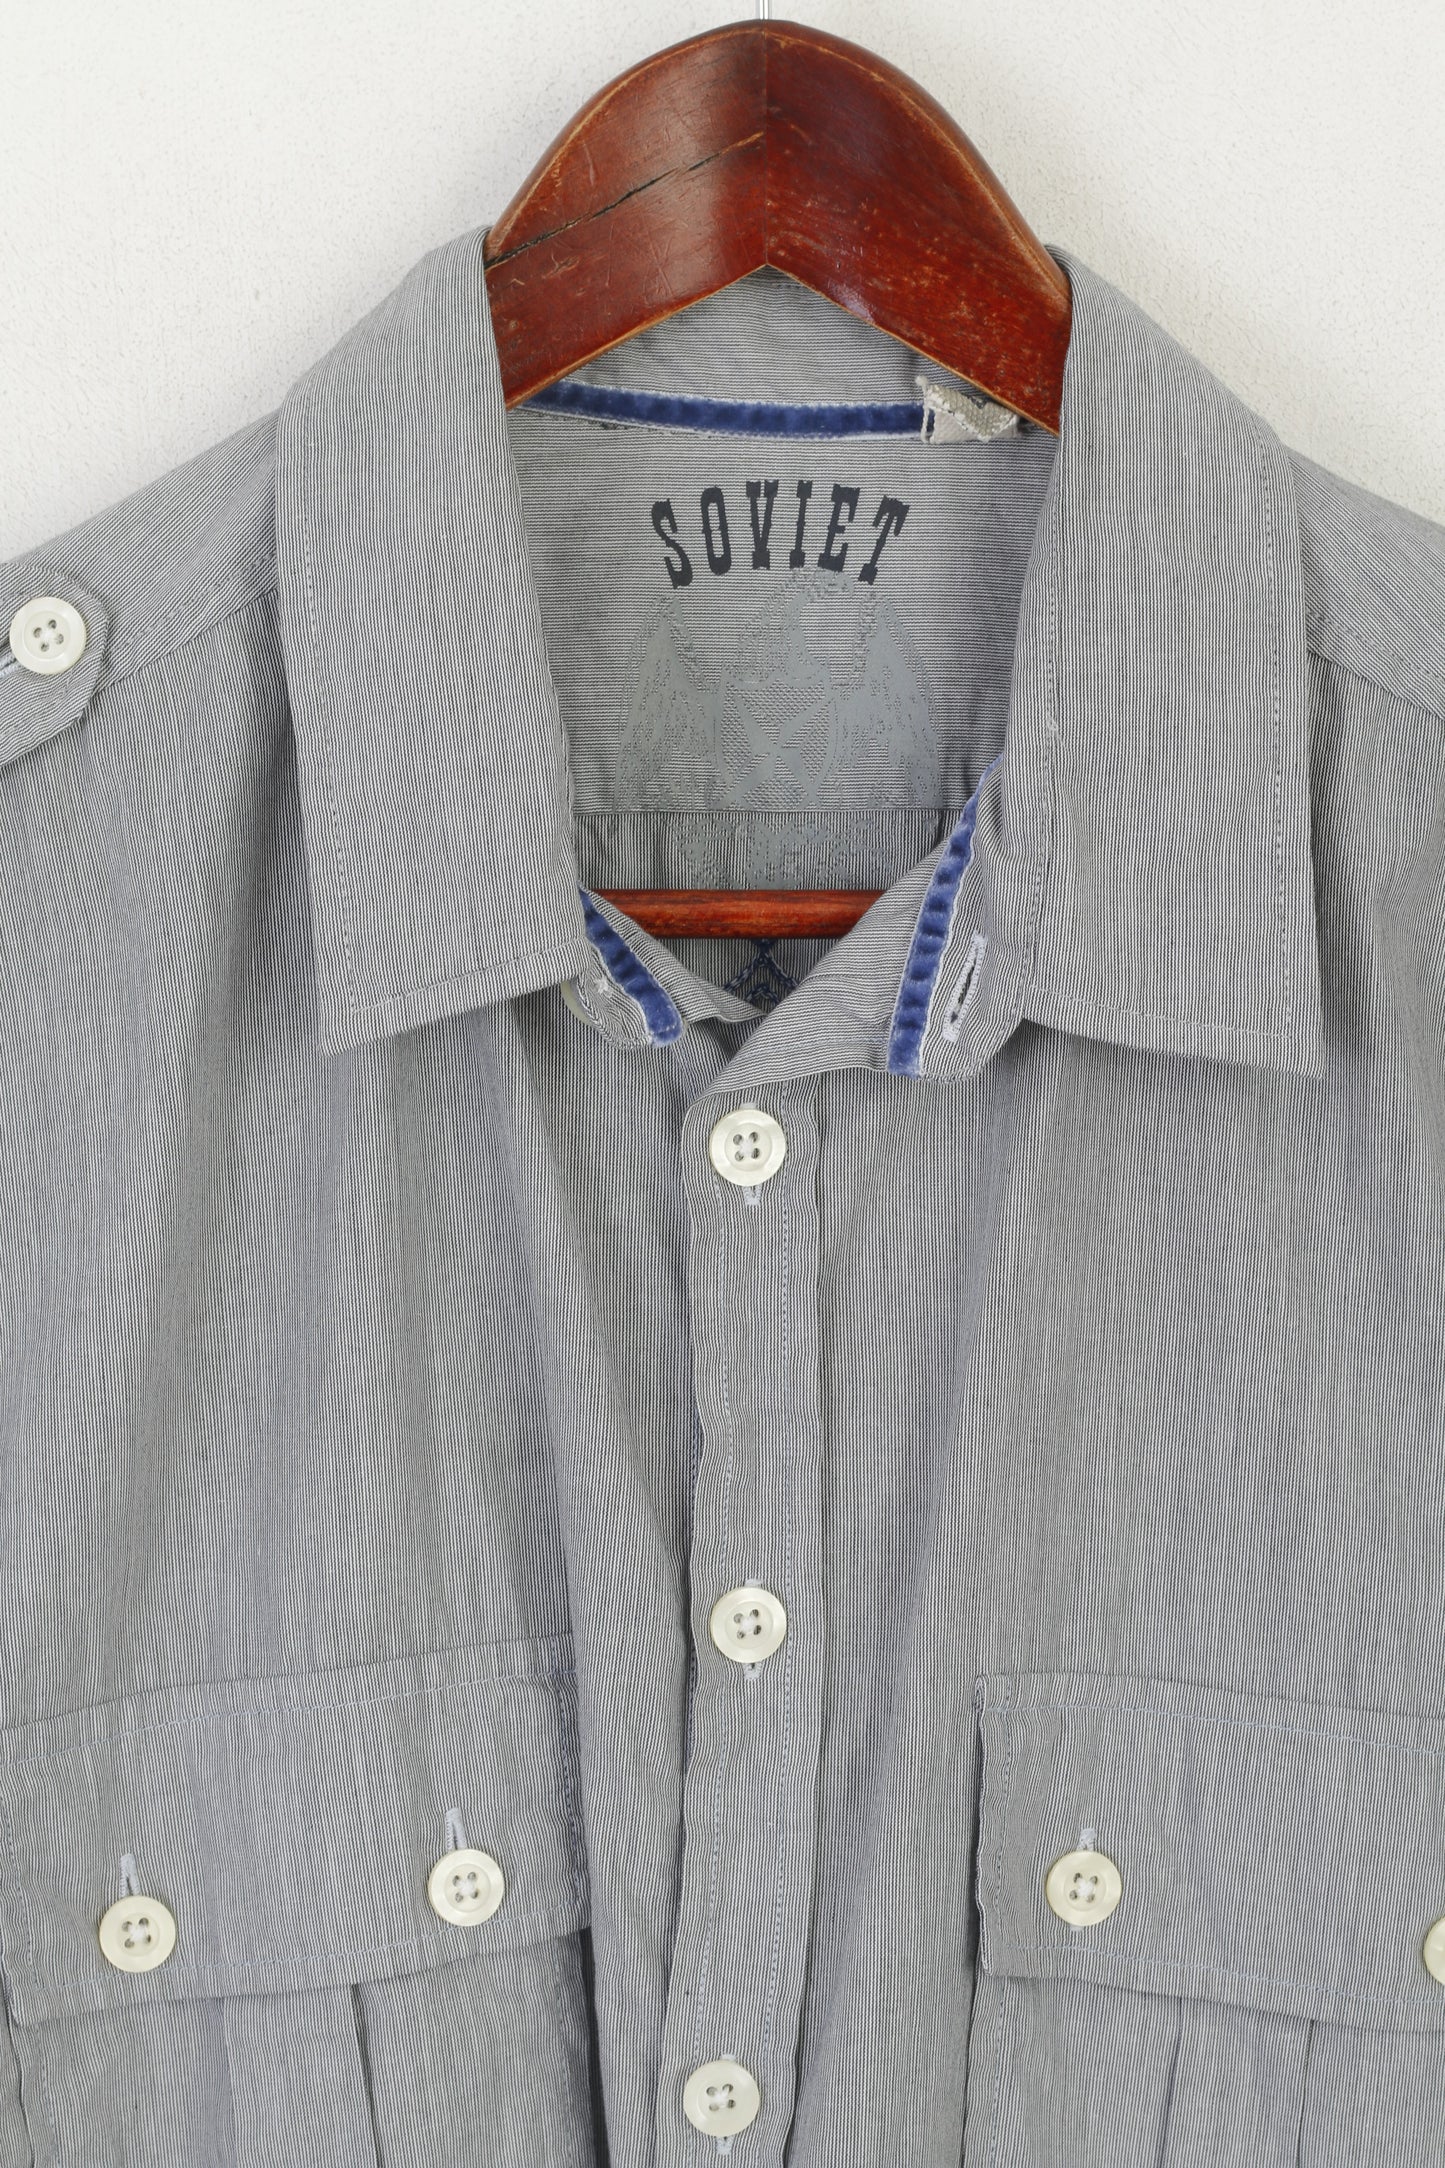 Soviet Men L Casual Shirt Gray Cotton Striped Pocket Slim Fit Long Sleeve Top